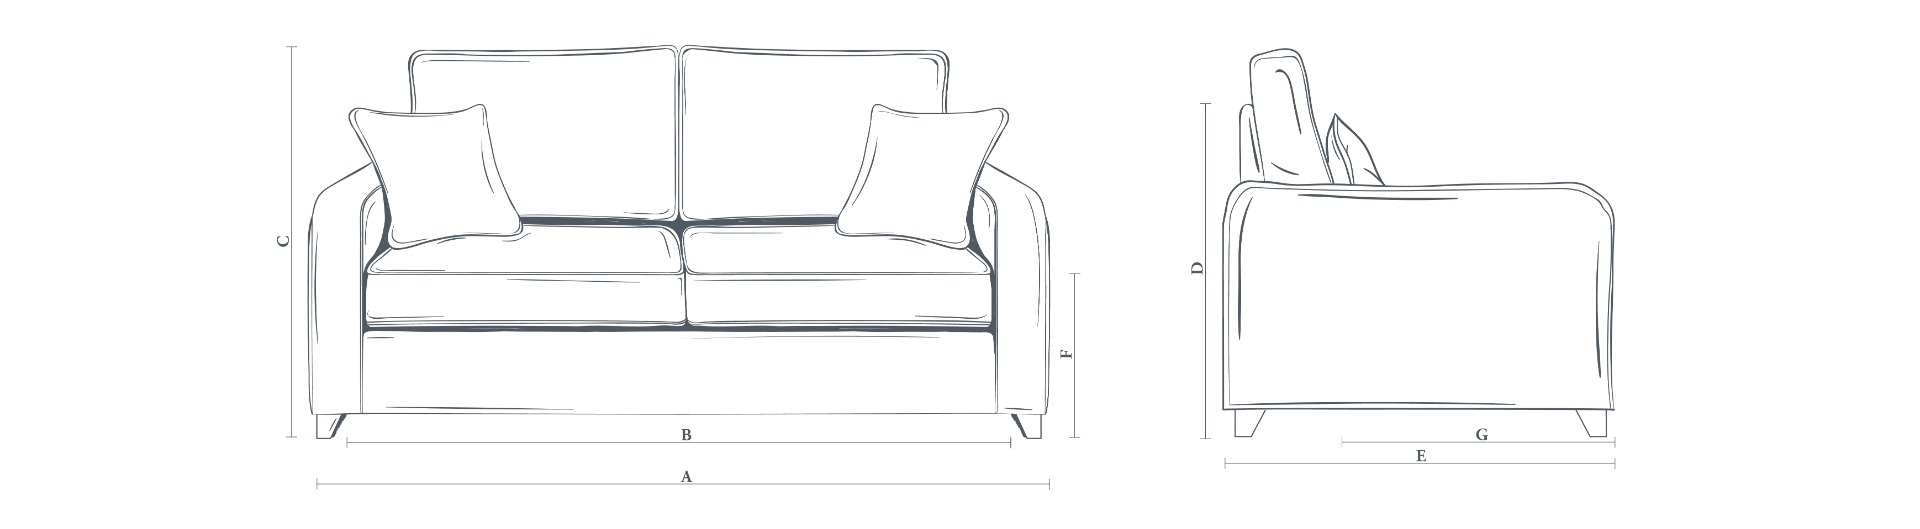 The Dunsmore Sofa 3 Seater